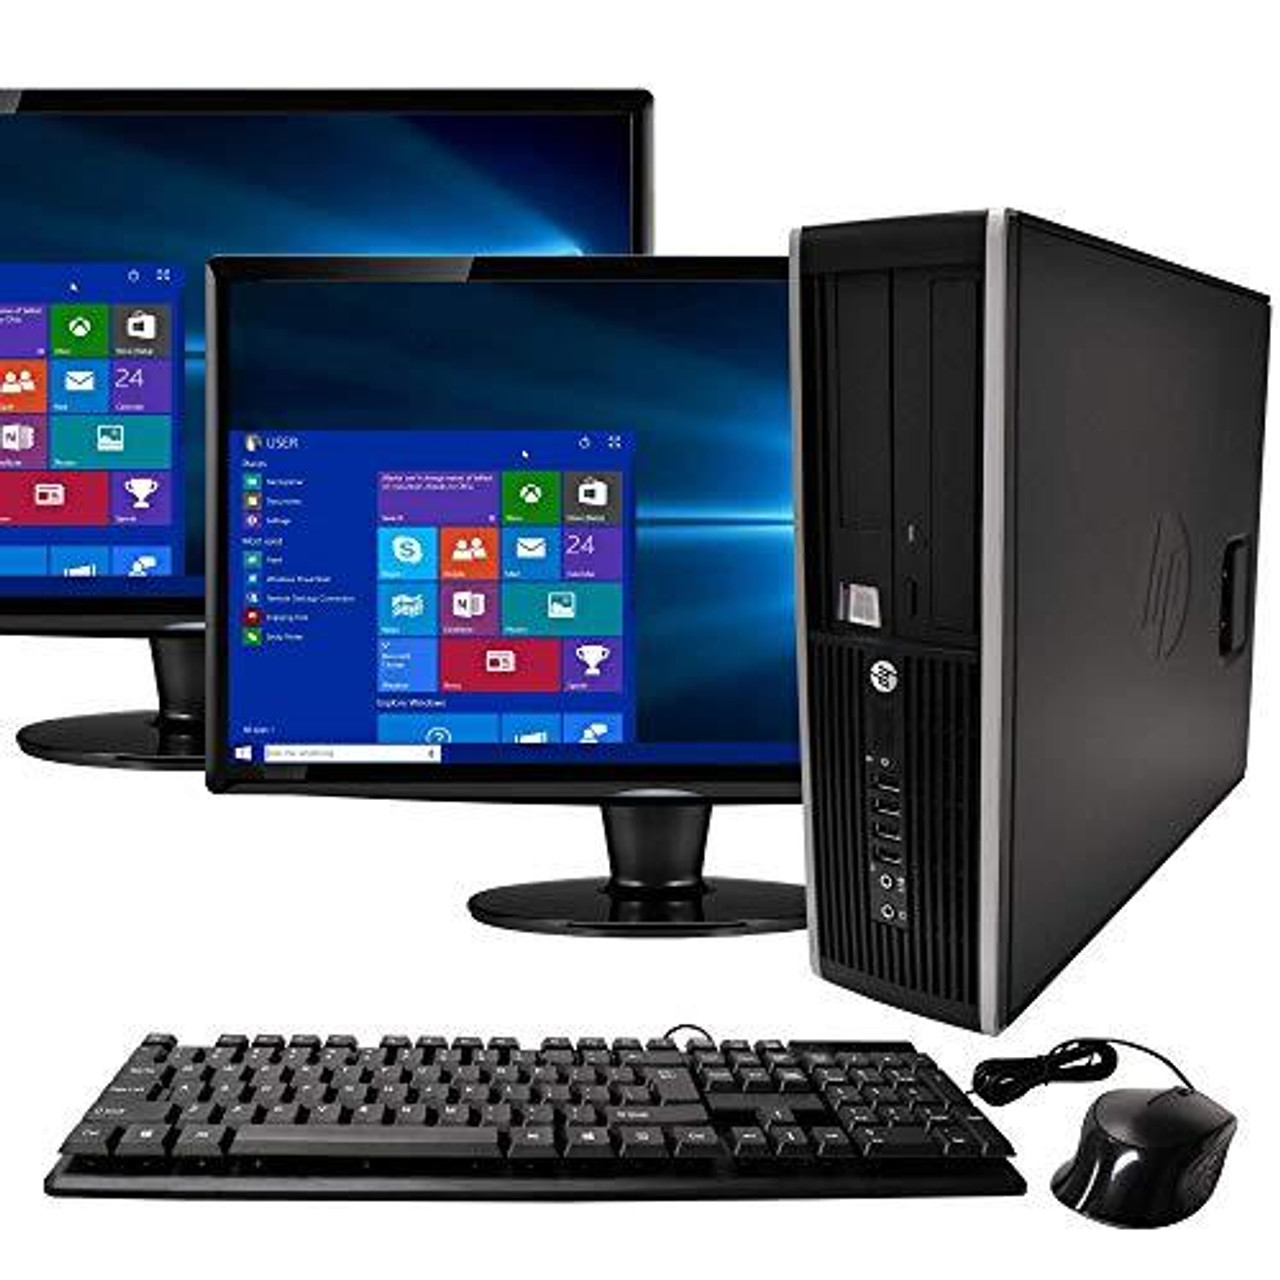 HP Elite Desktop Computer, Intel Core i5 3.1GHz, 8GB RAM, 1TB SATA HDD,  Keyboard 